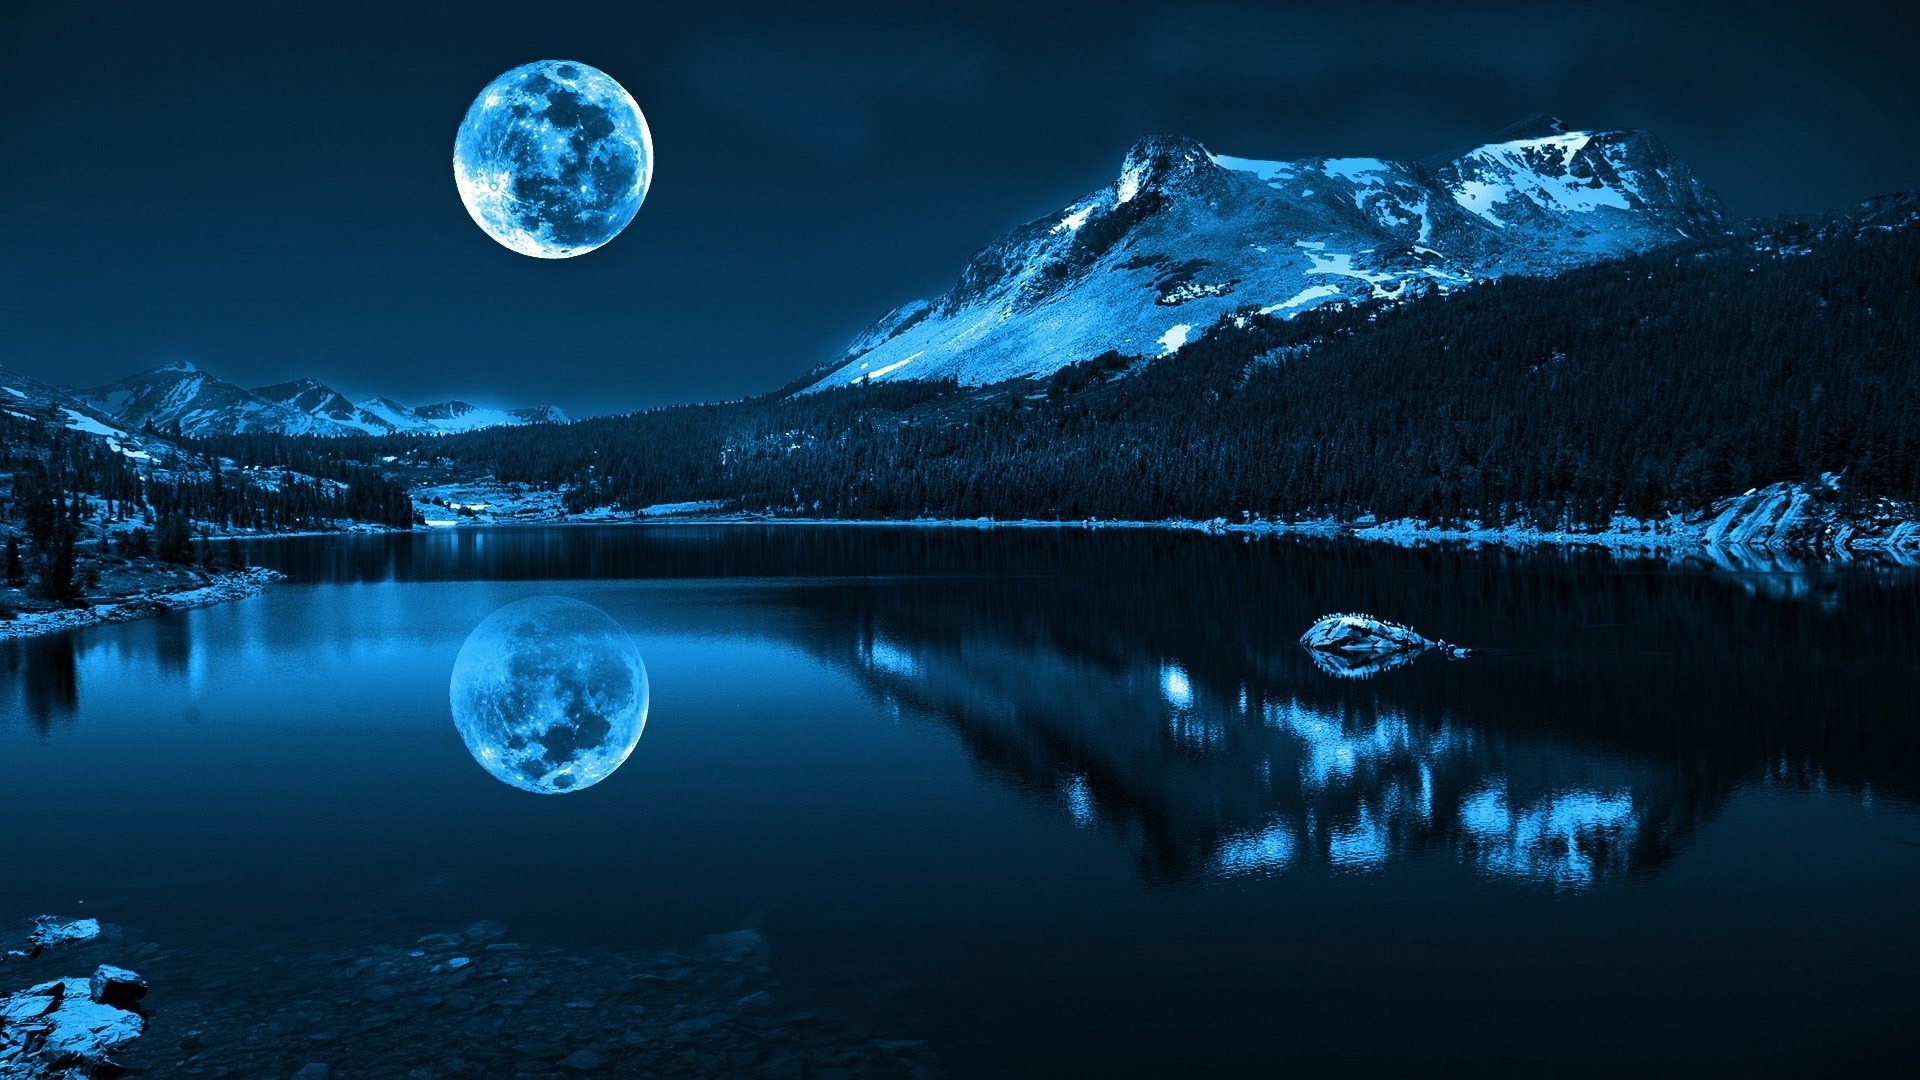 Full Moon by Pratiksha Date on Dribbble